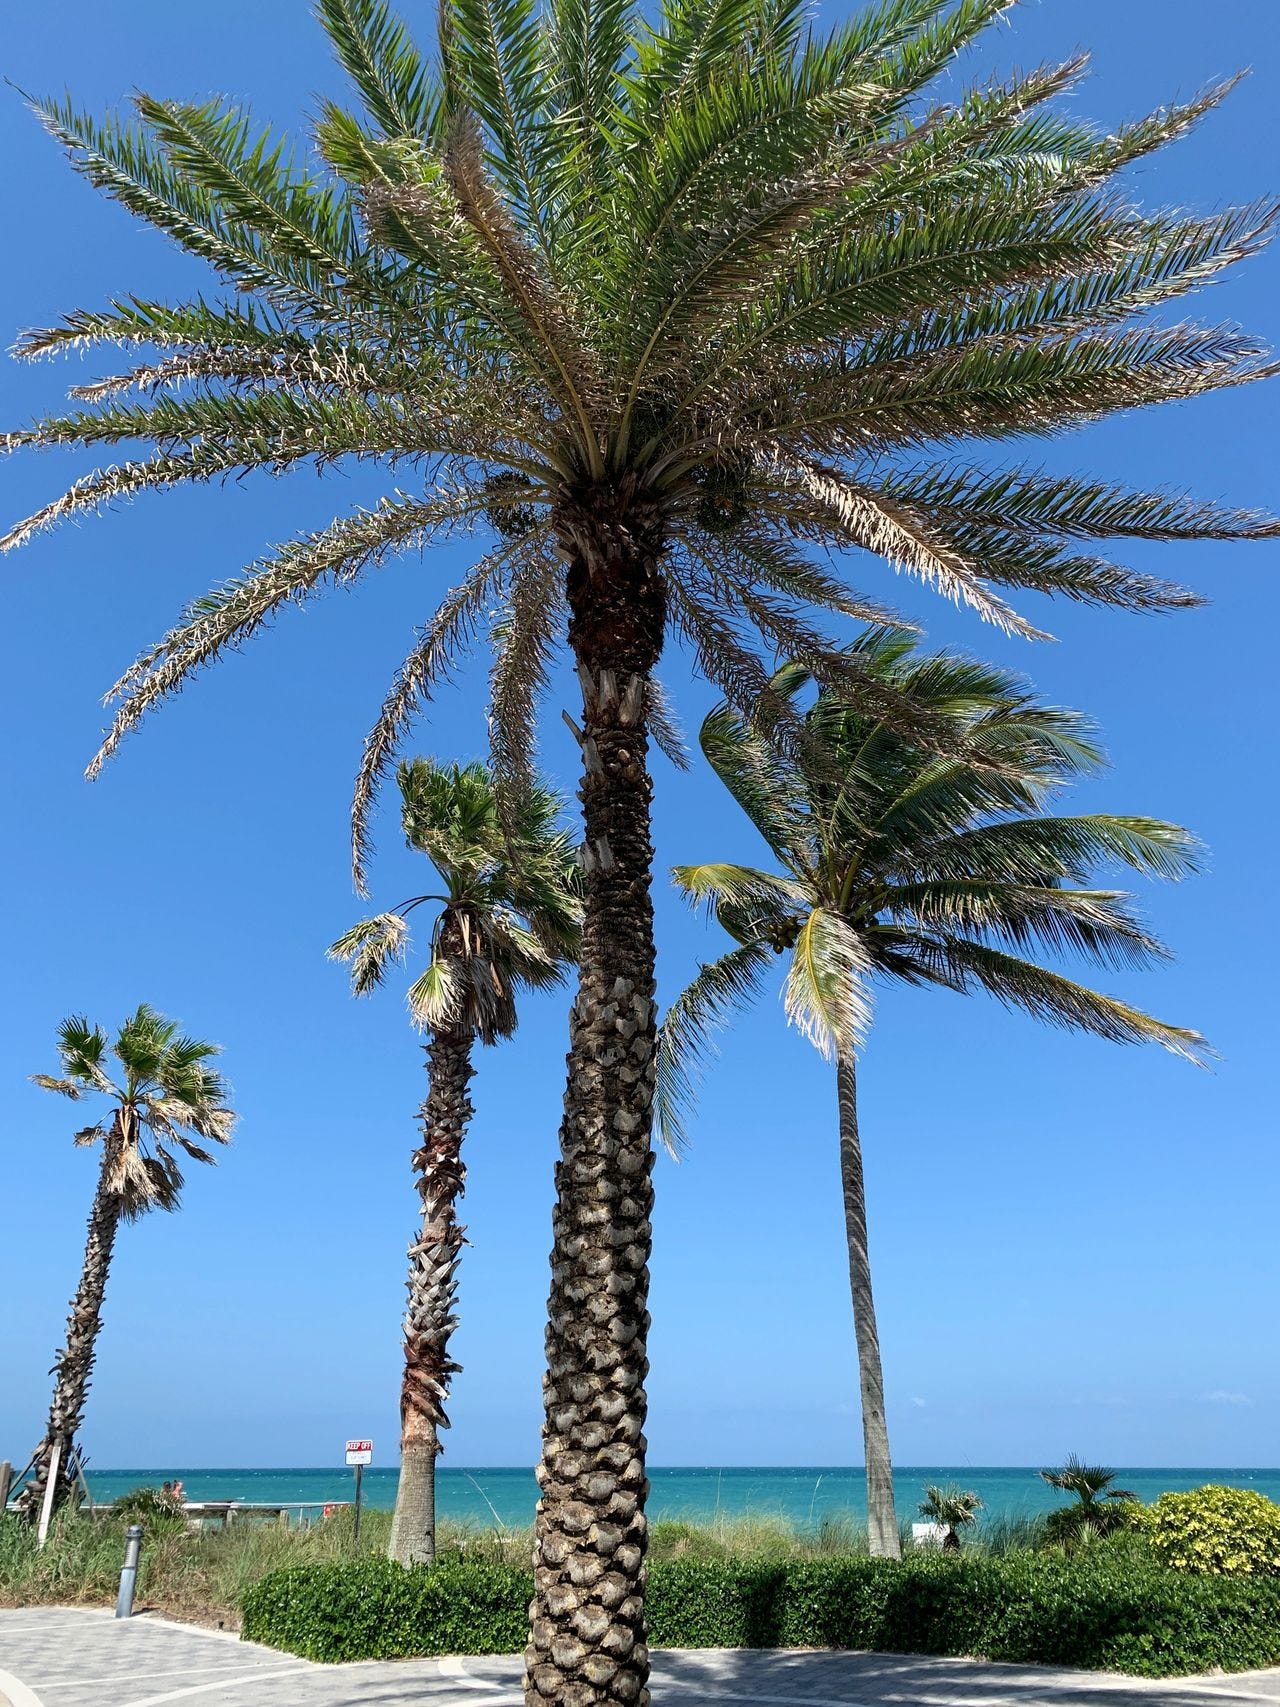 View at Vero Beach, Florida